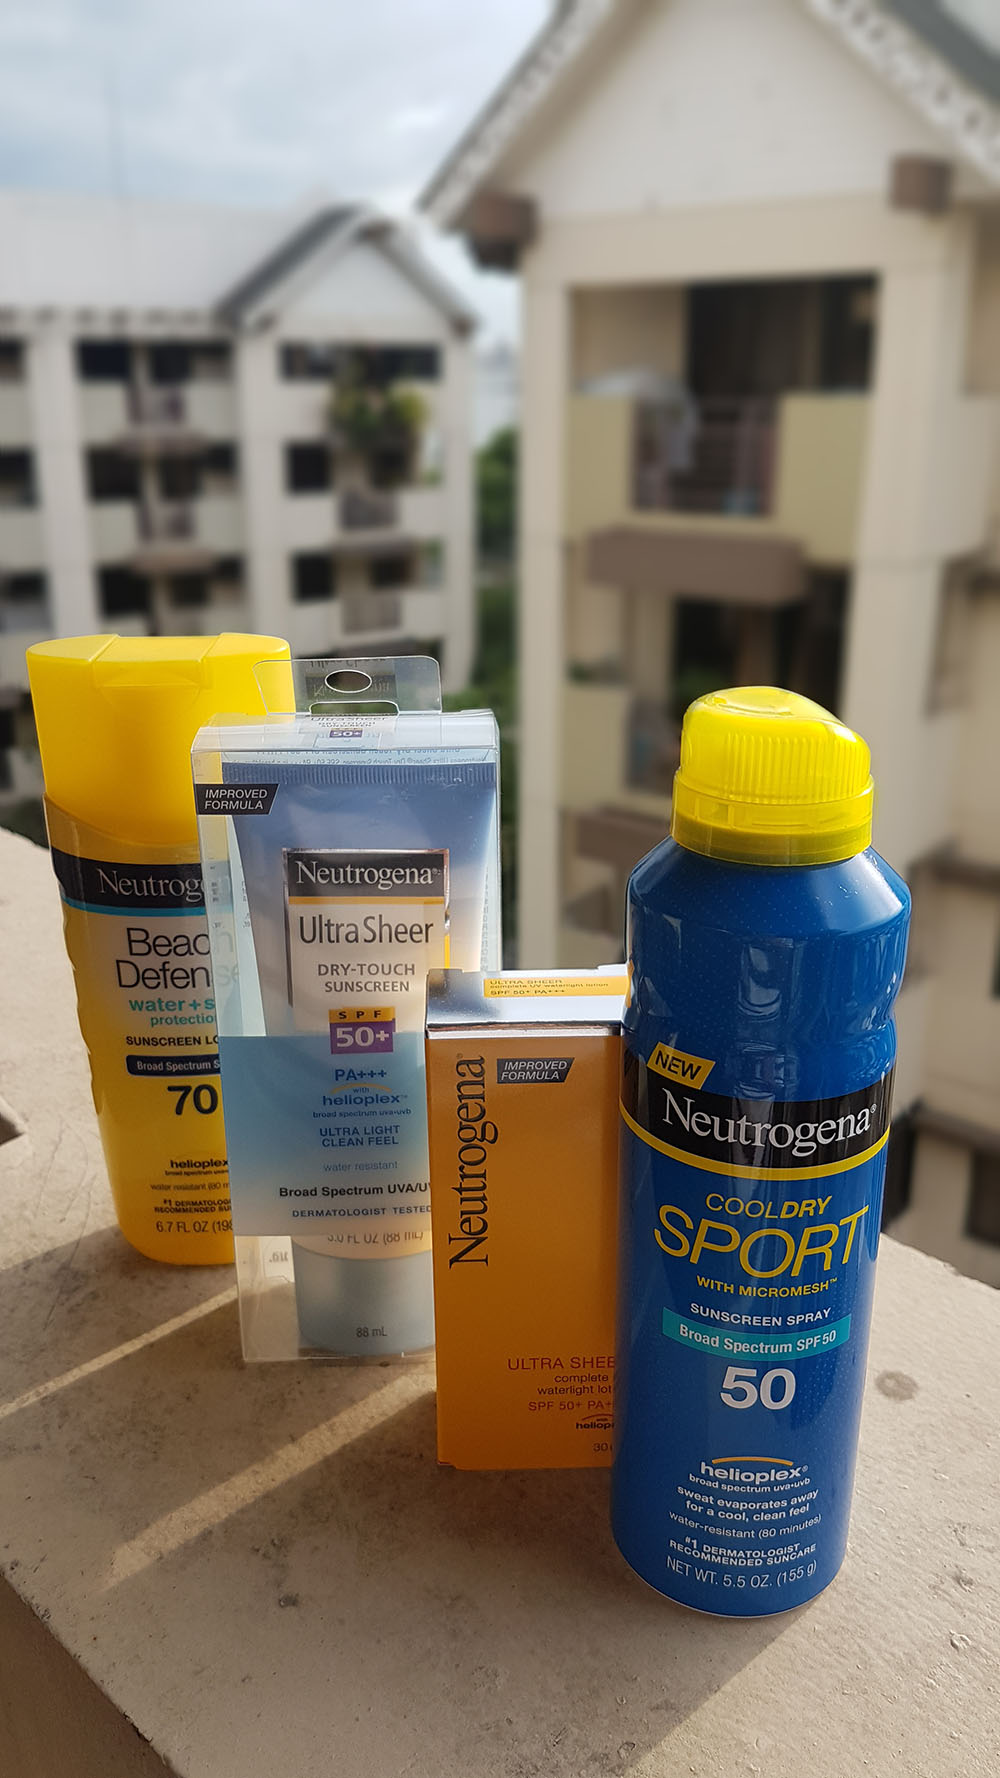 Neutrogena sunscreens available at Watsons